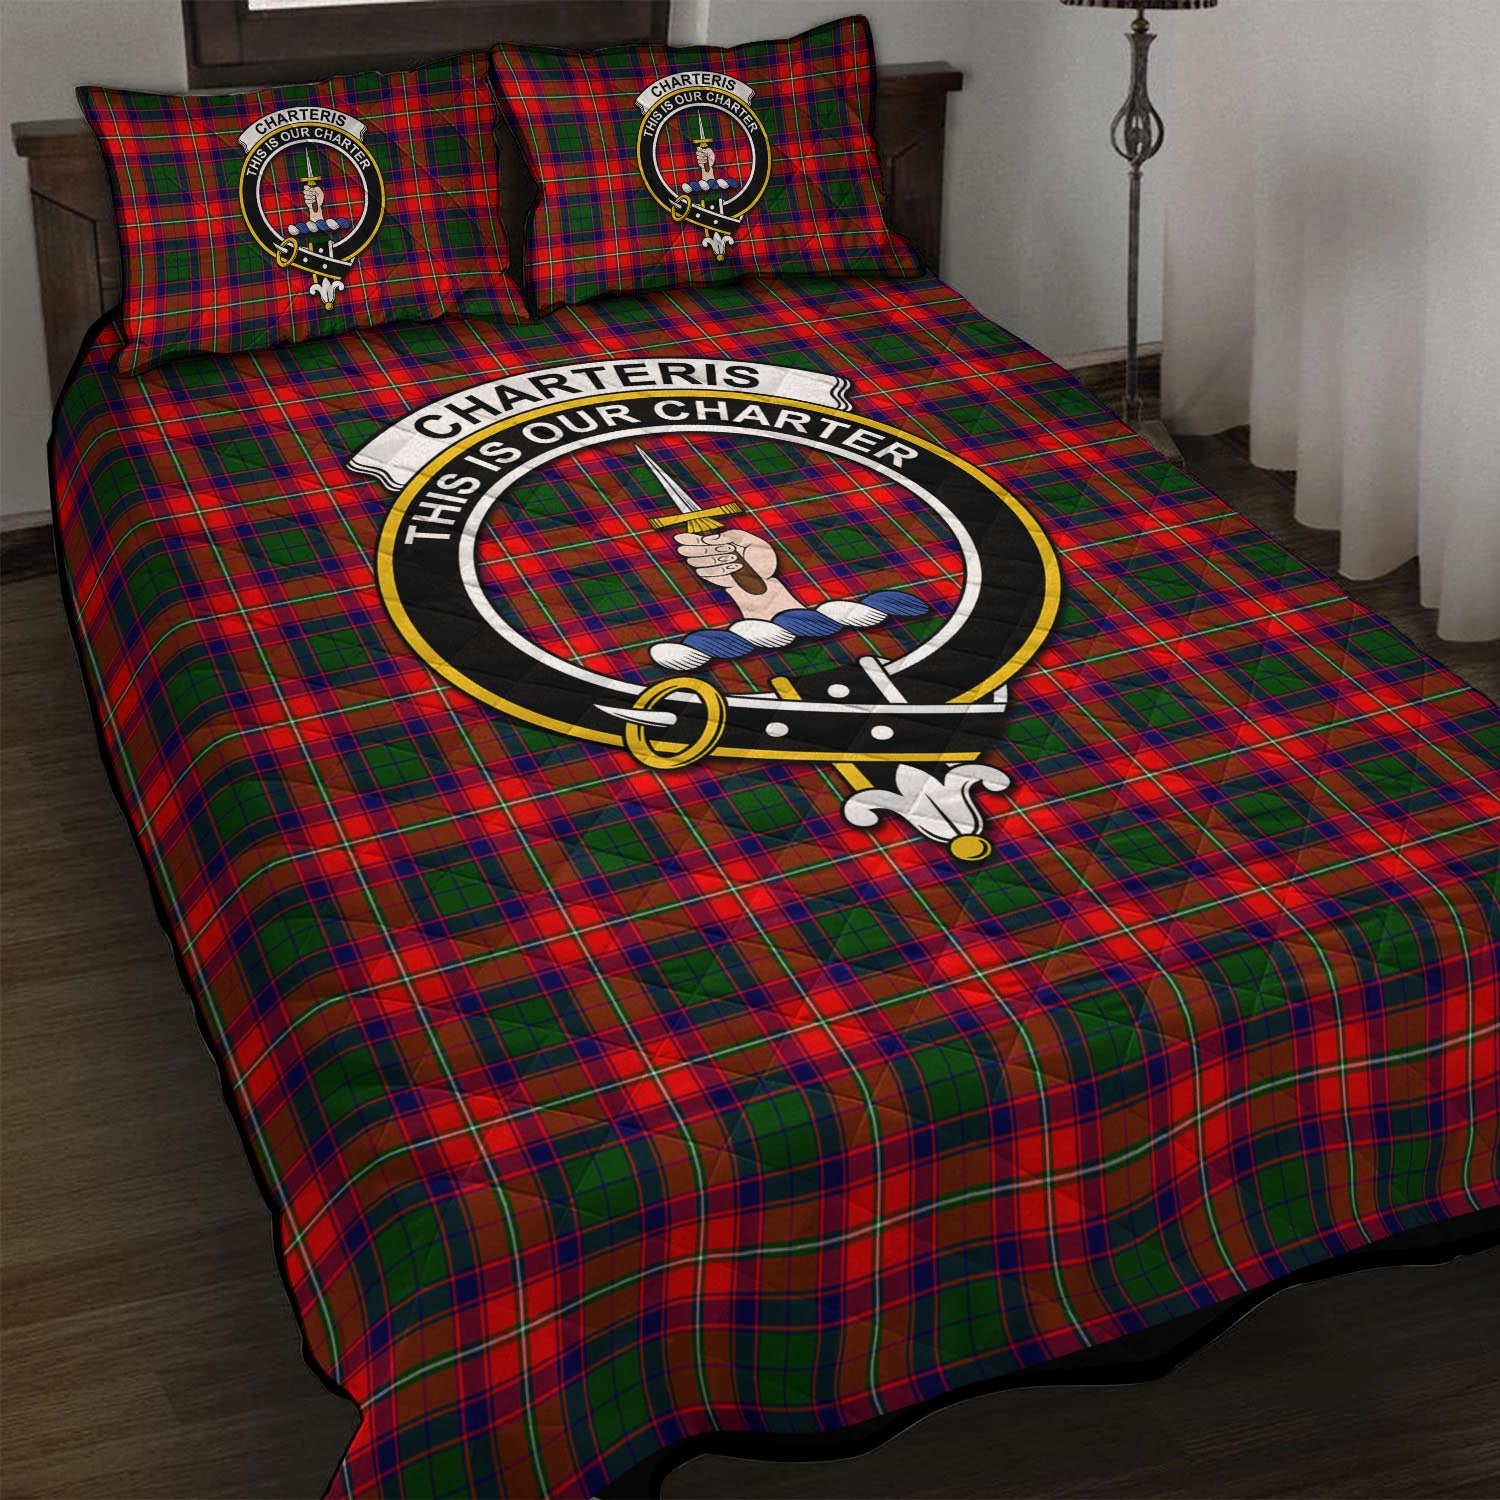 Charteris Tartan Quilt Bed Set with Family Crest - Tartanvibesclothing